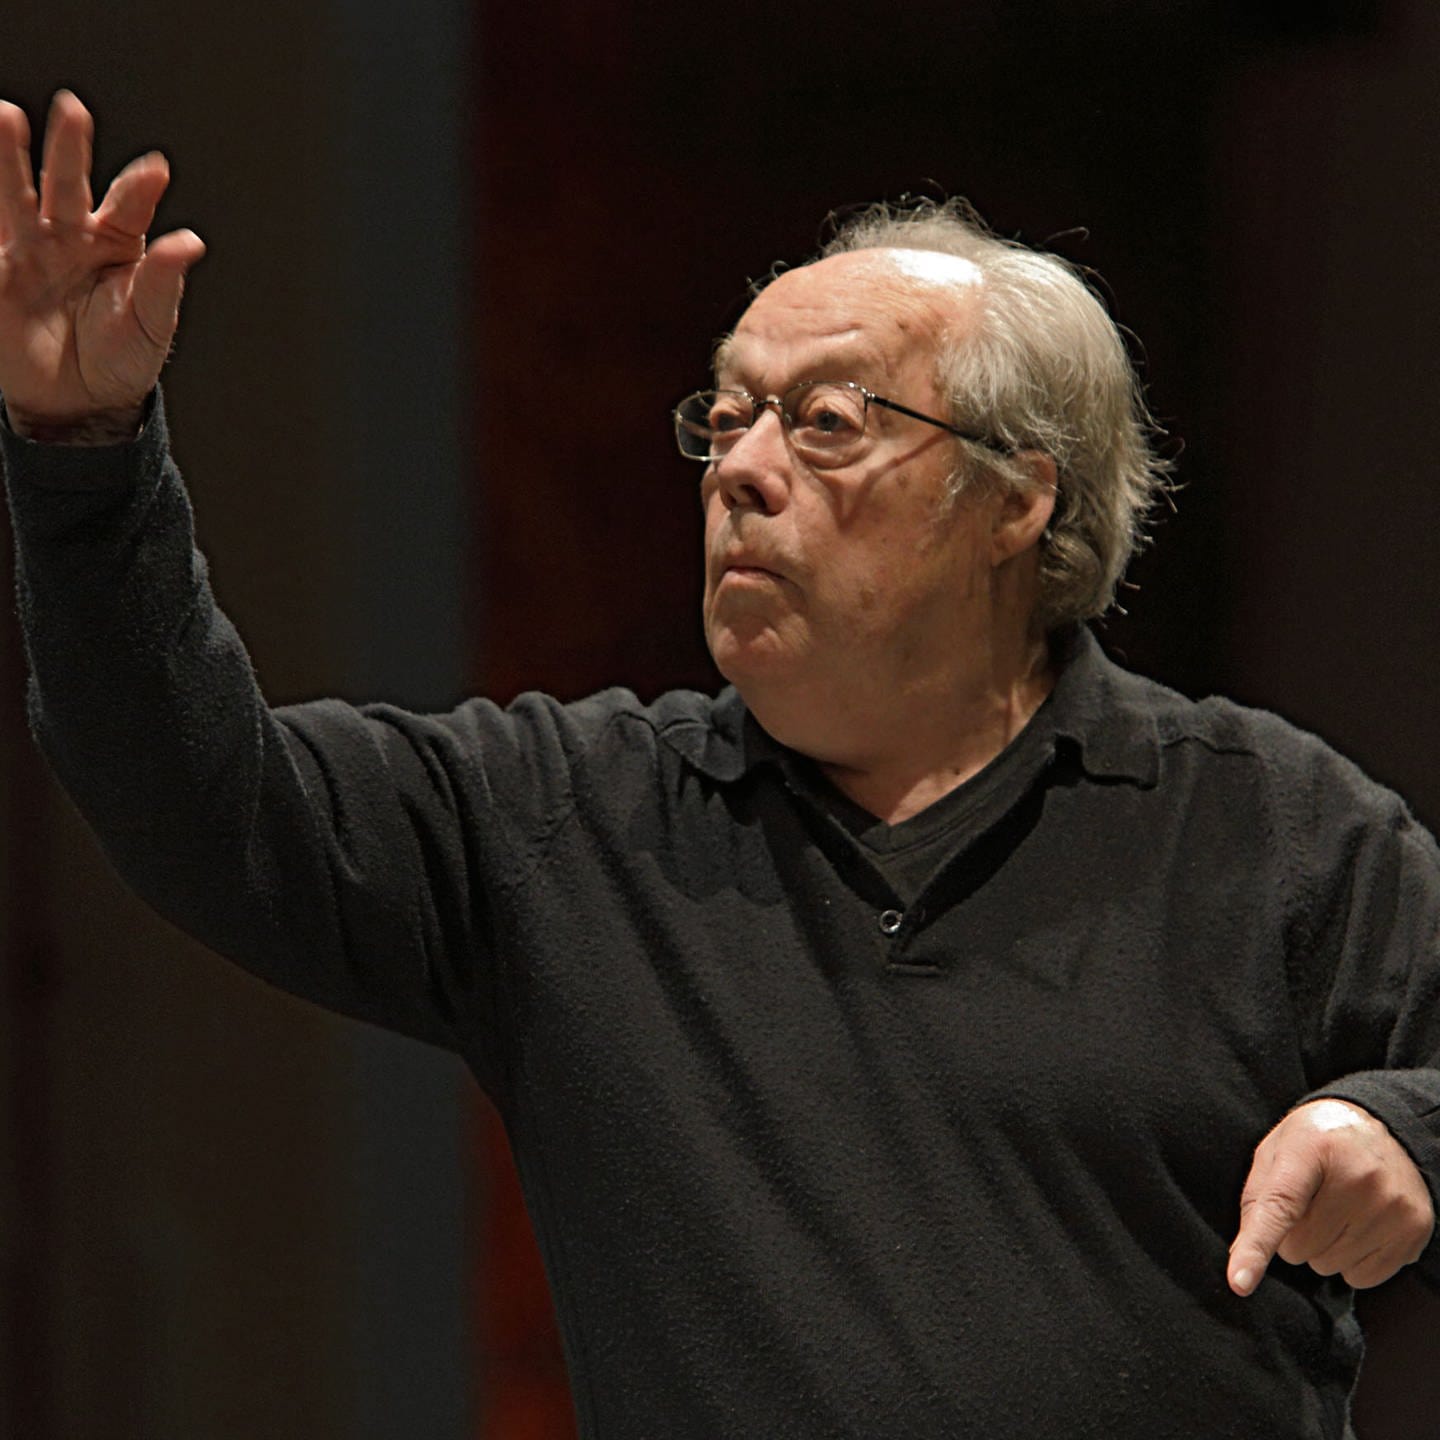 Der Dirigent und Lehrer Jorma Panula – Begründer der finnischen Dirigentenschule